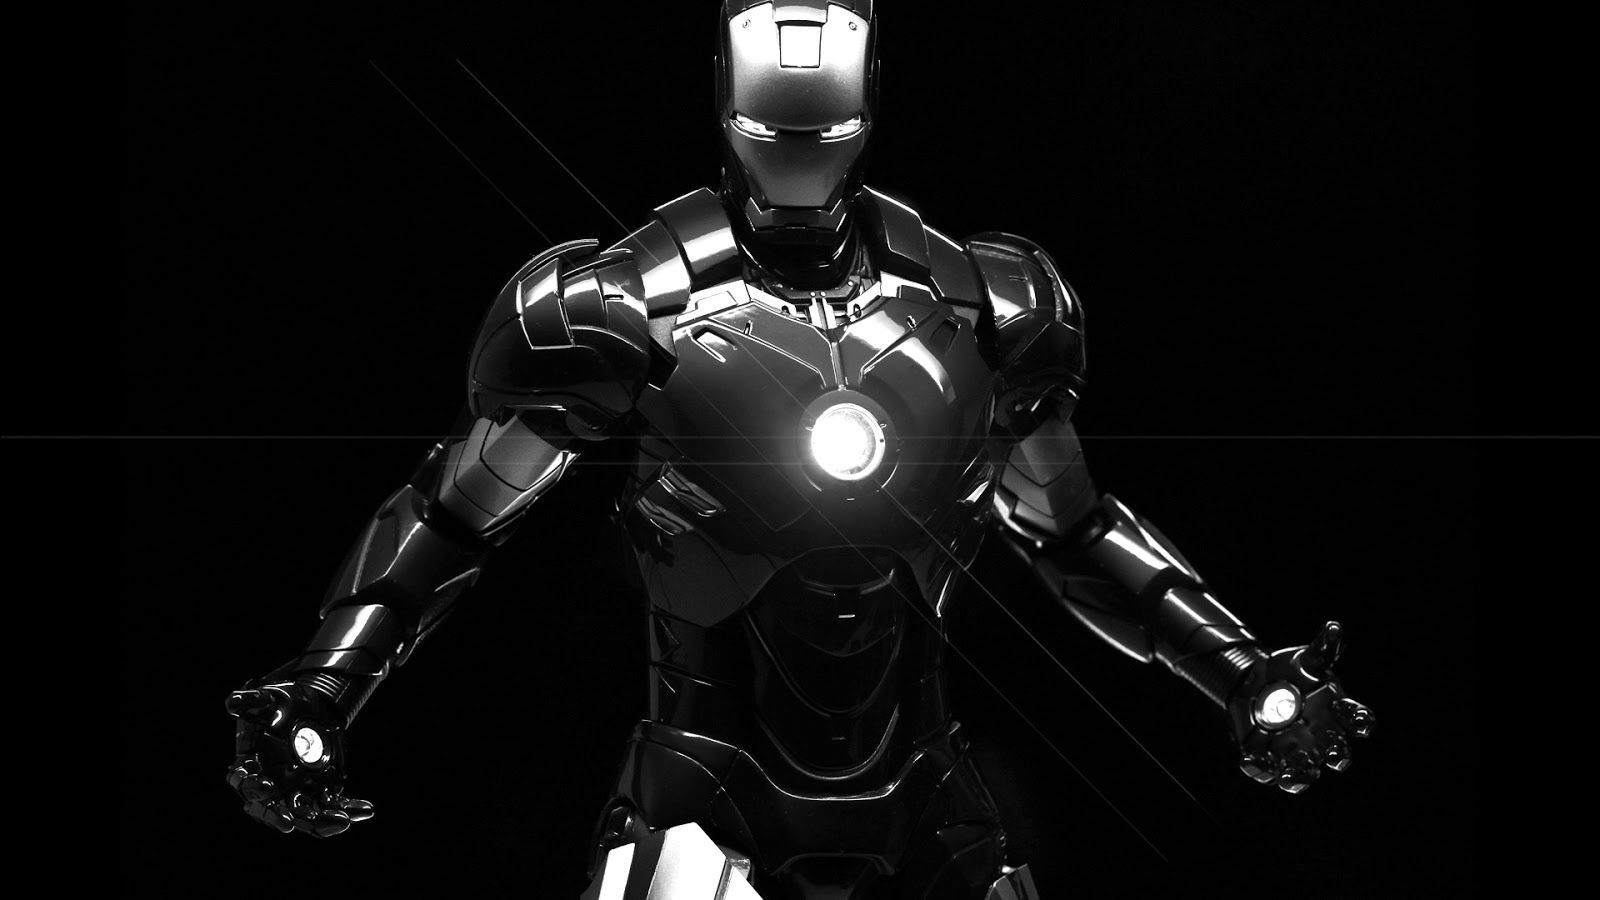 Iron Man Black and White Wallpaper Free Iron Man Black and White Background